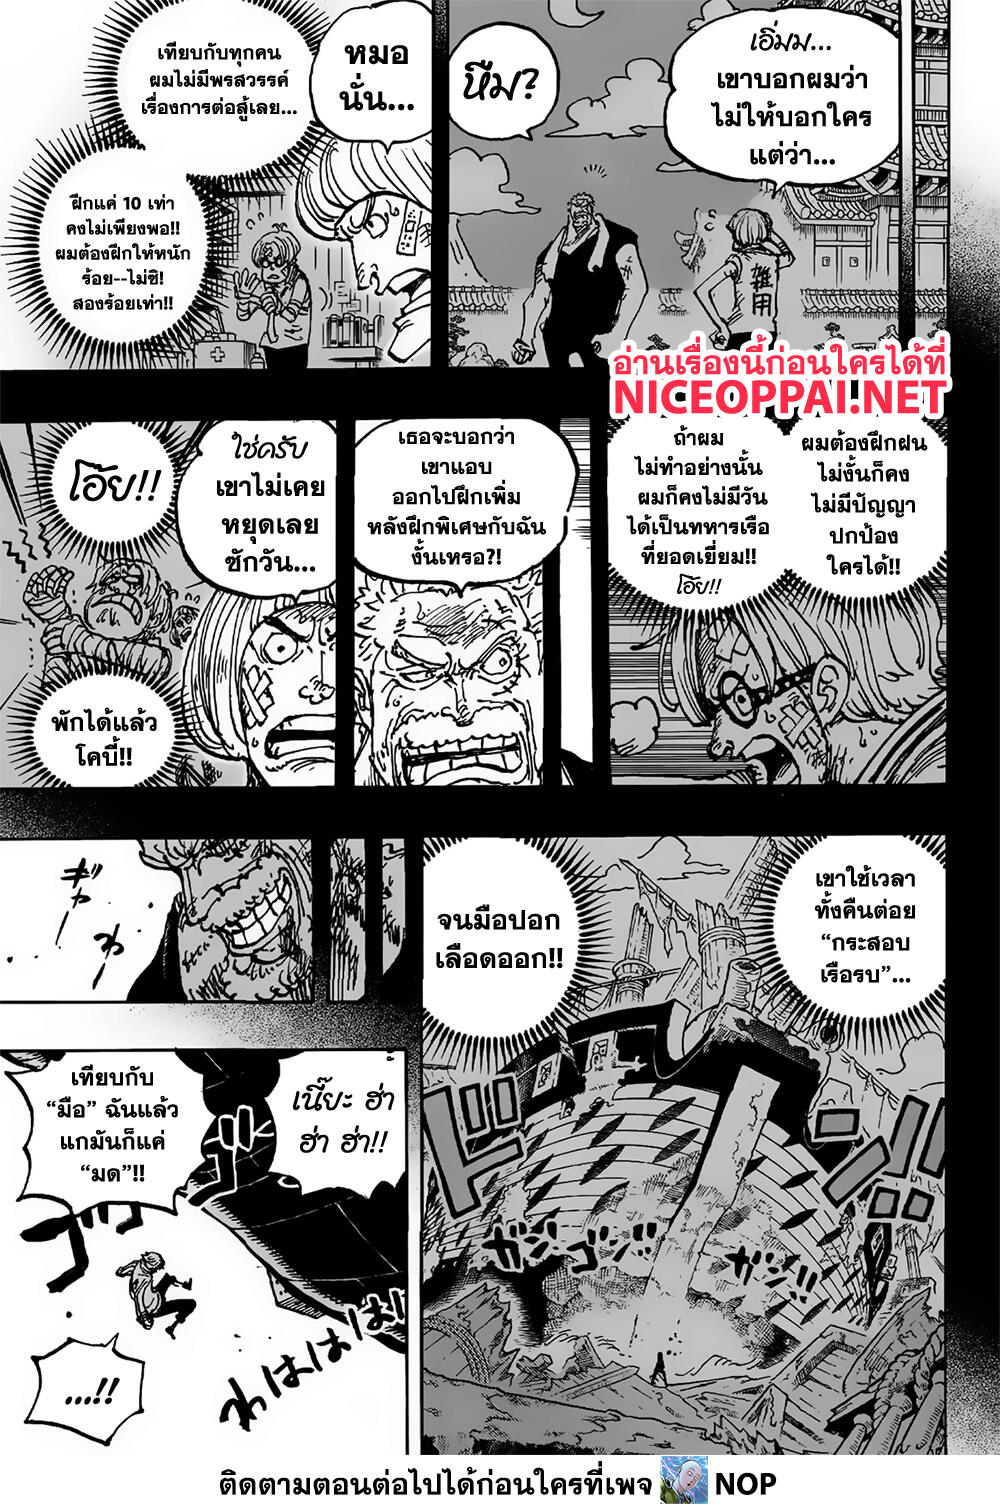 One Piece 1088-บทเรียนสุดท้าย